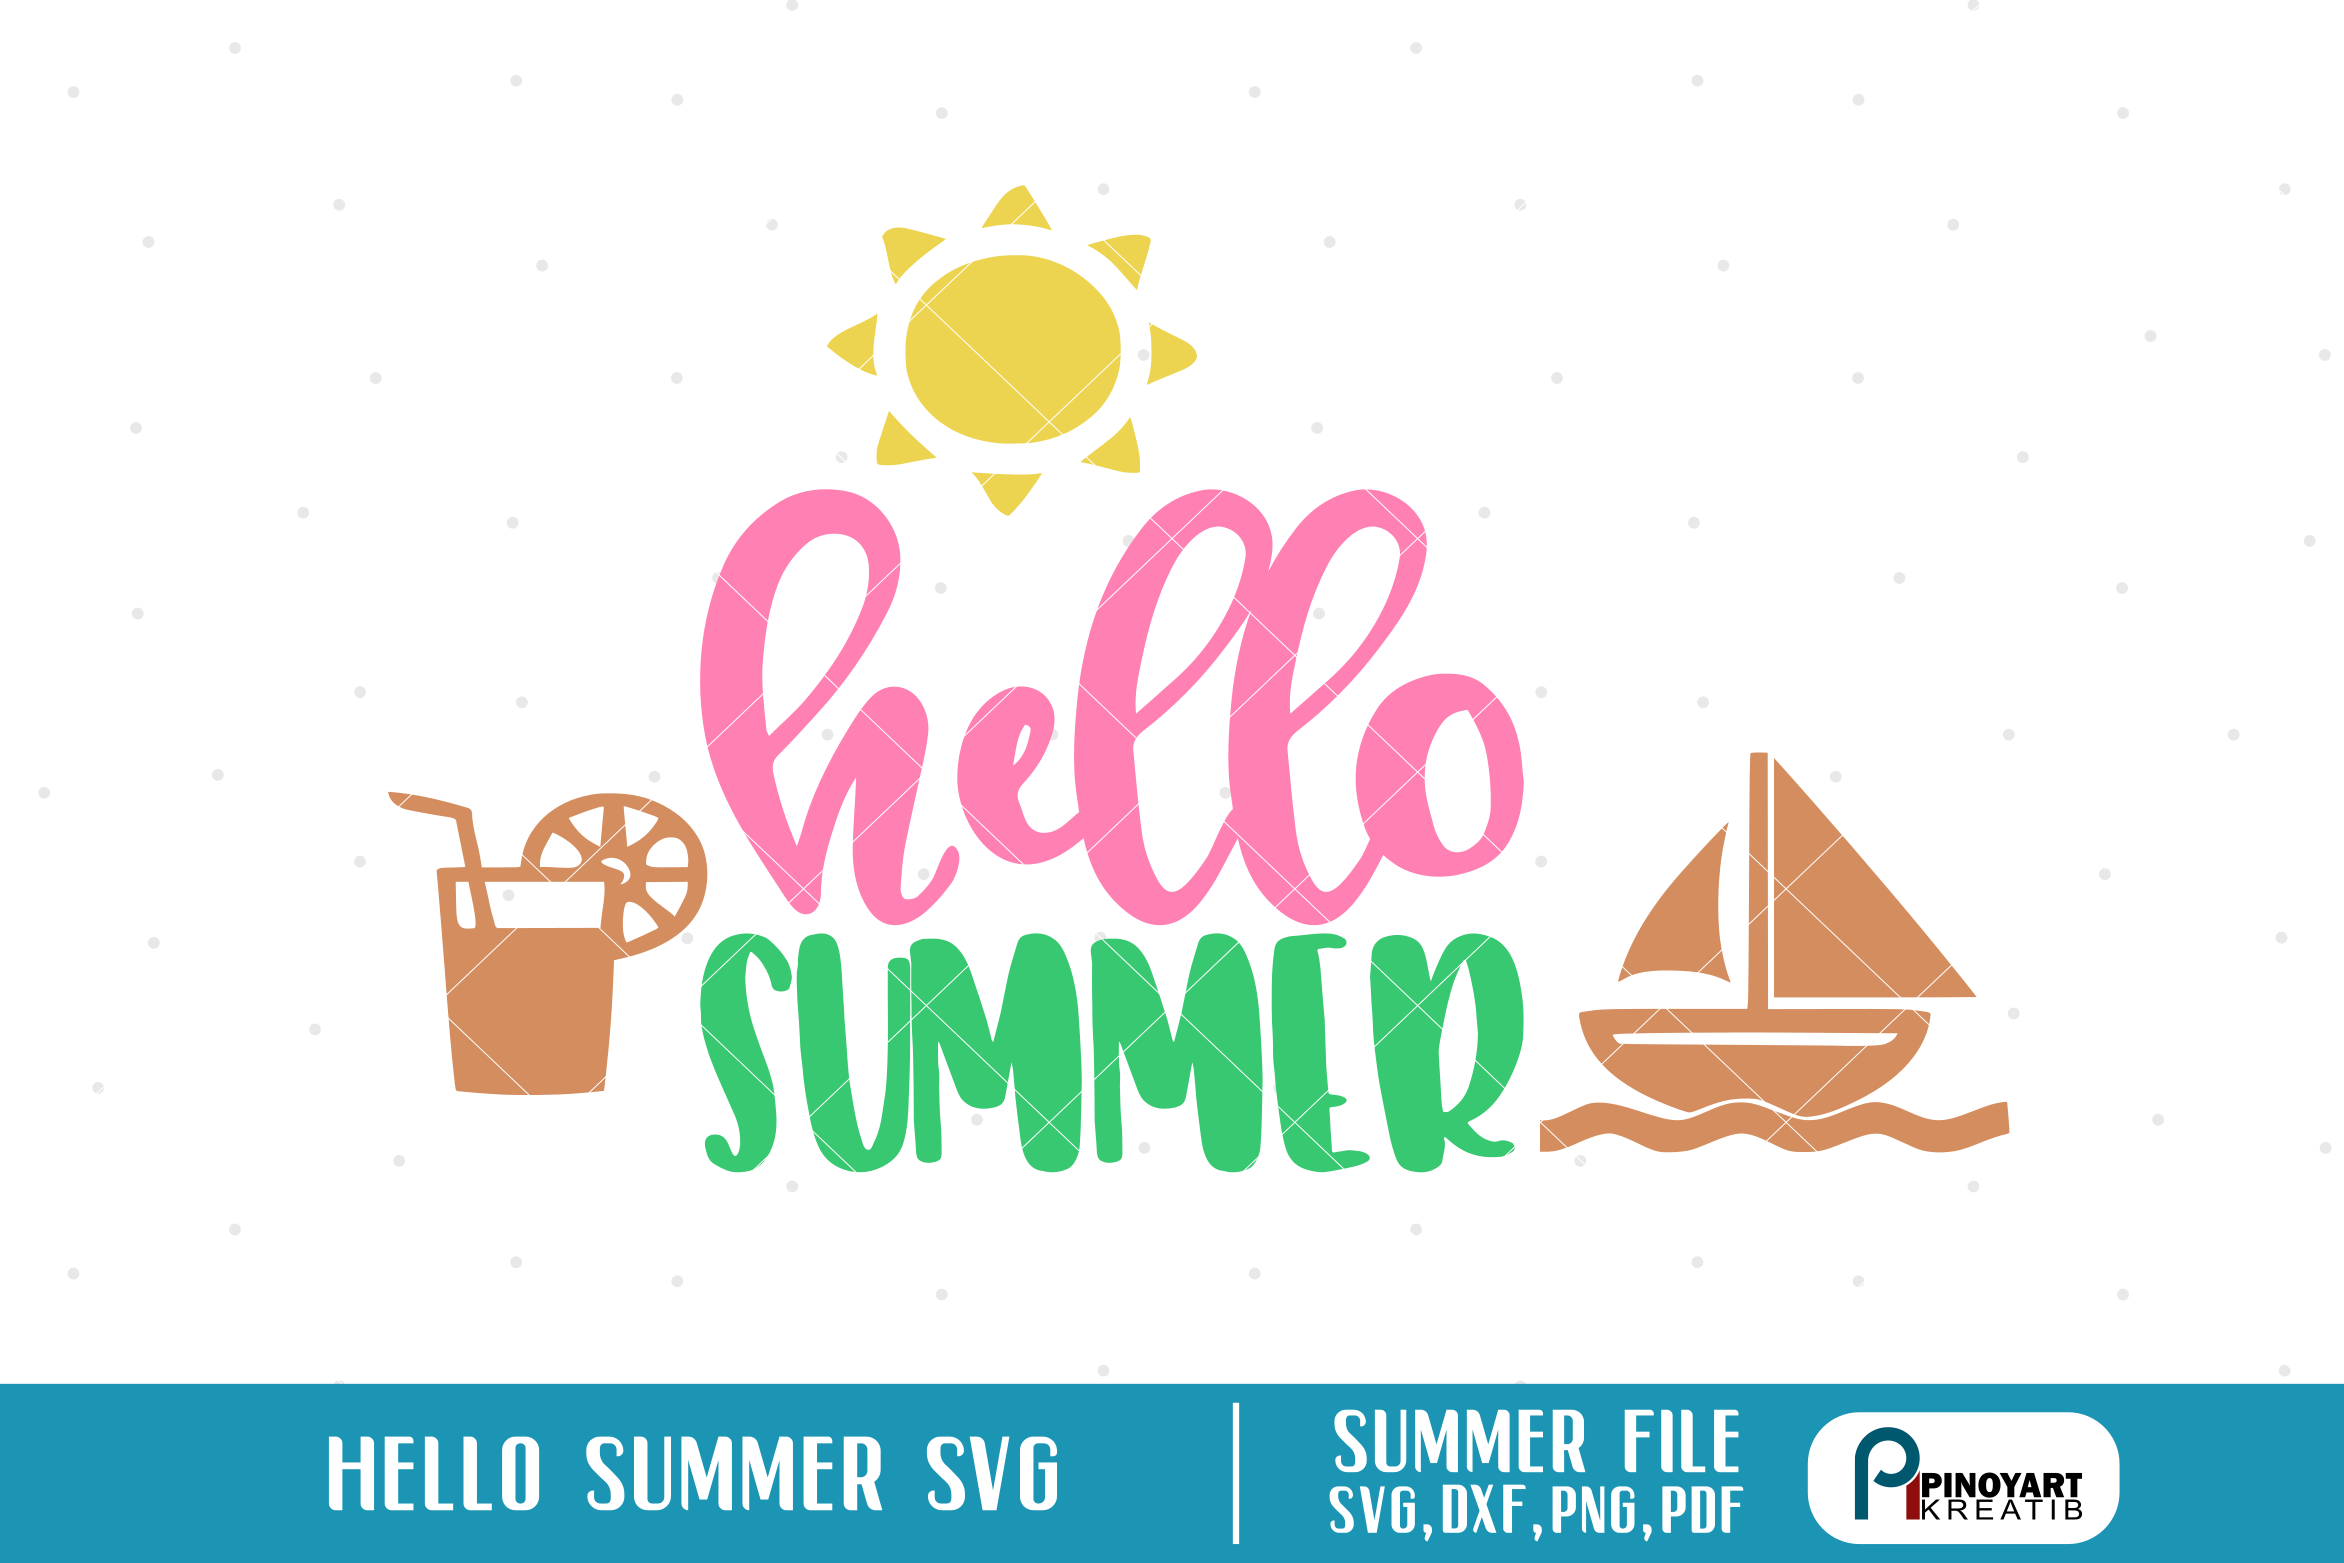 Download hello summer svg,summer svg,summer svg file,summer dxf file